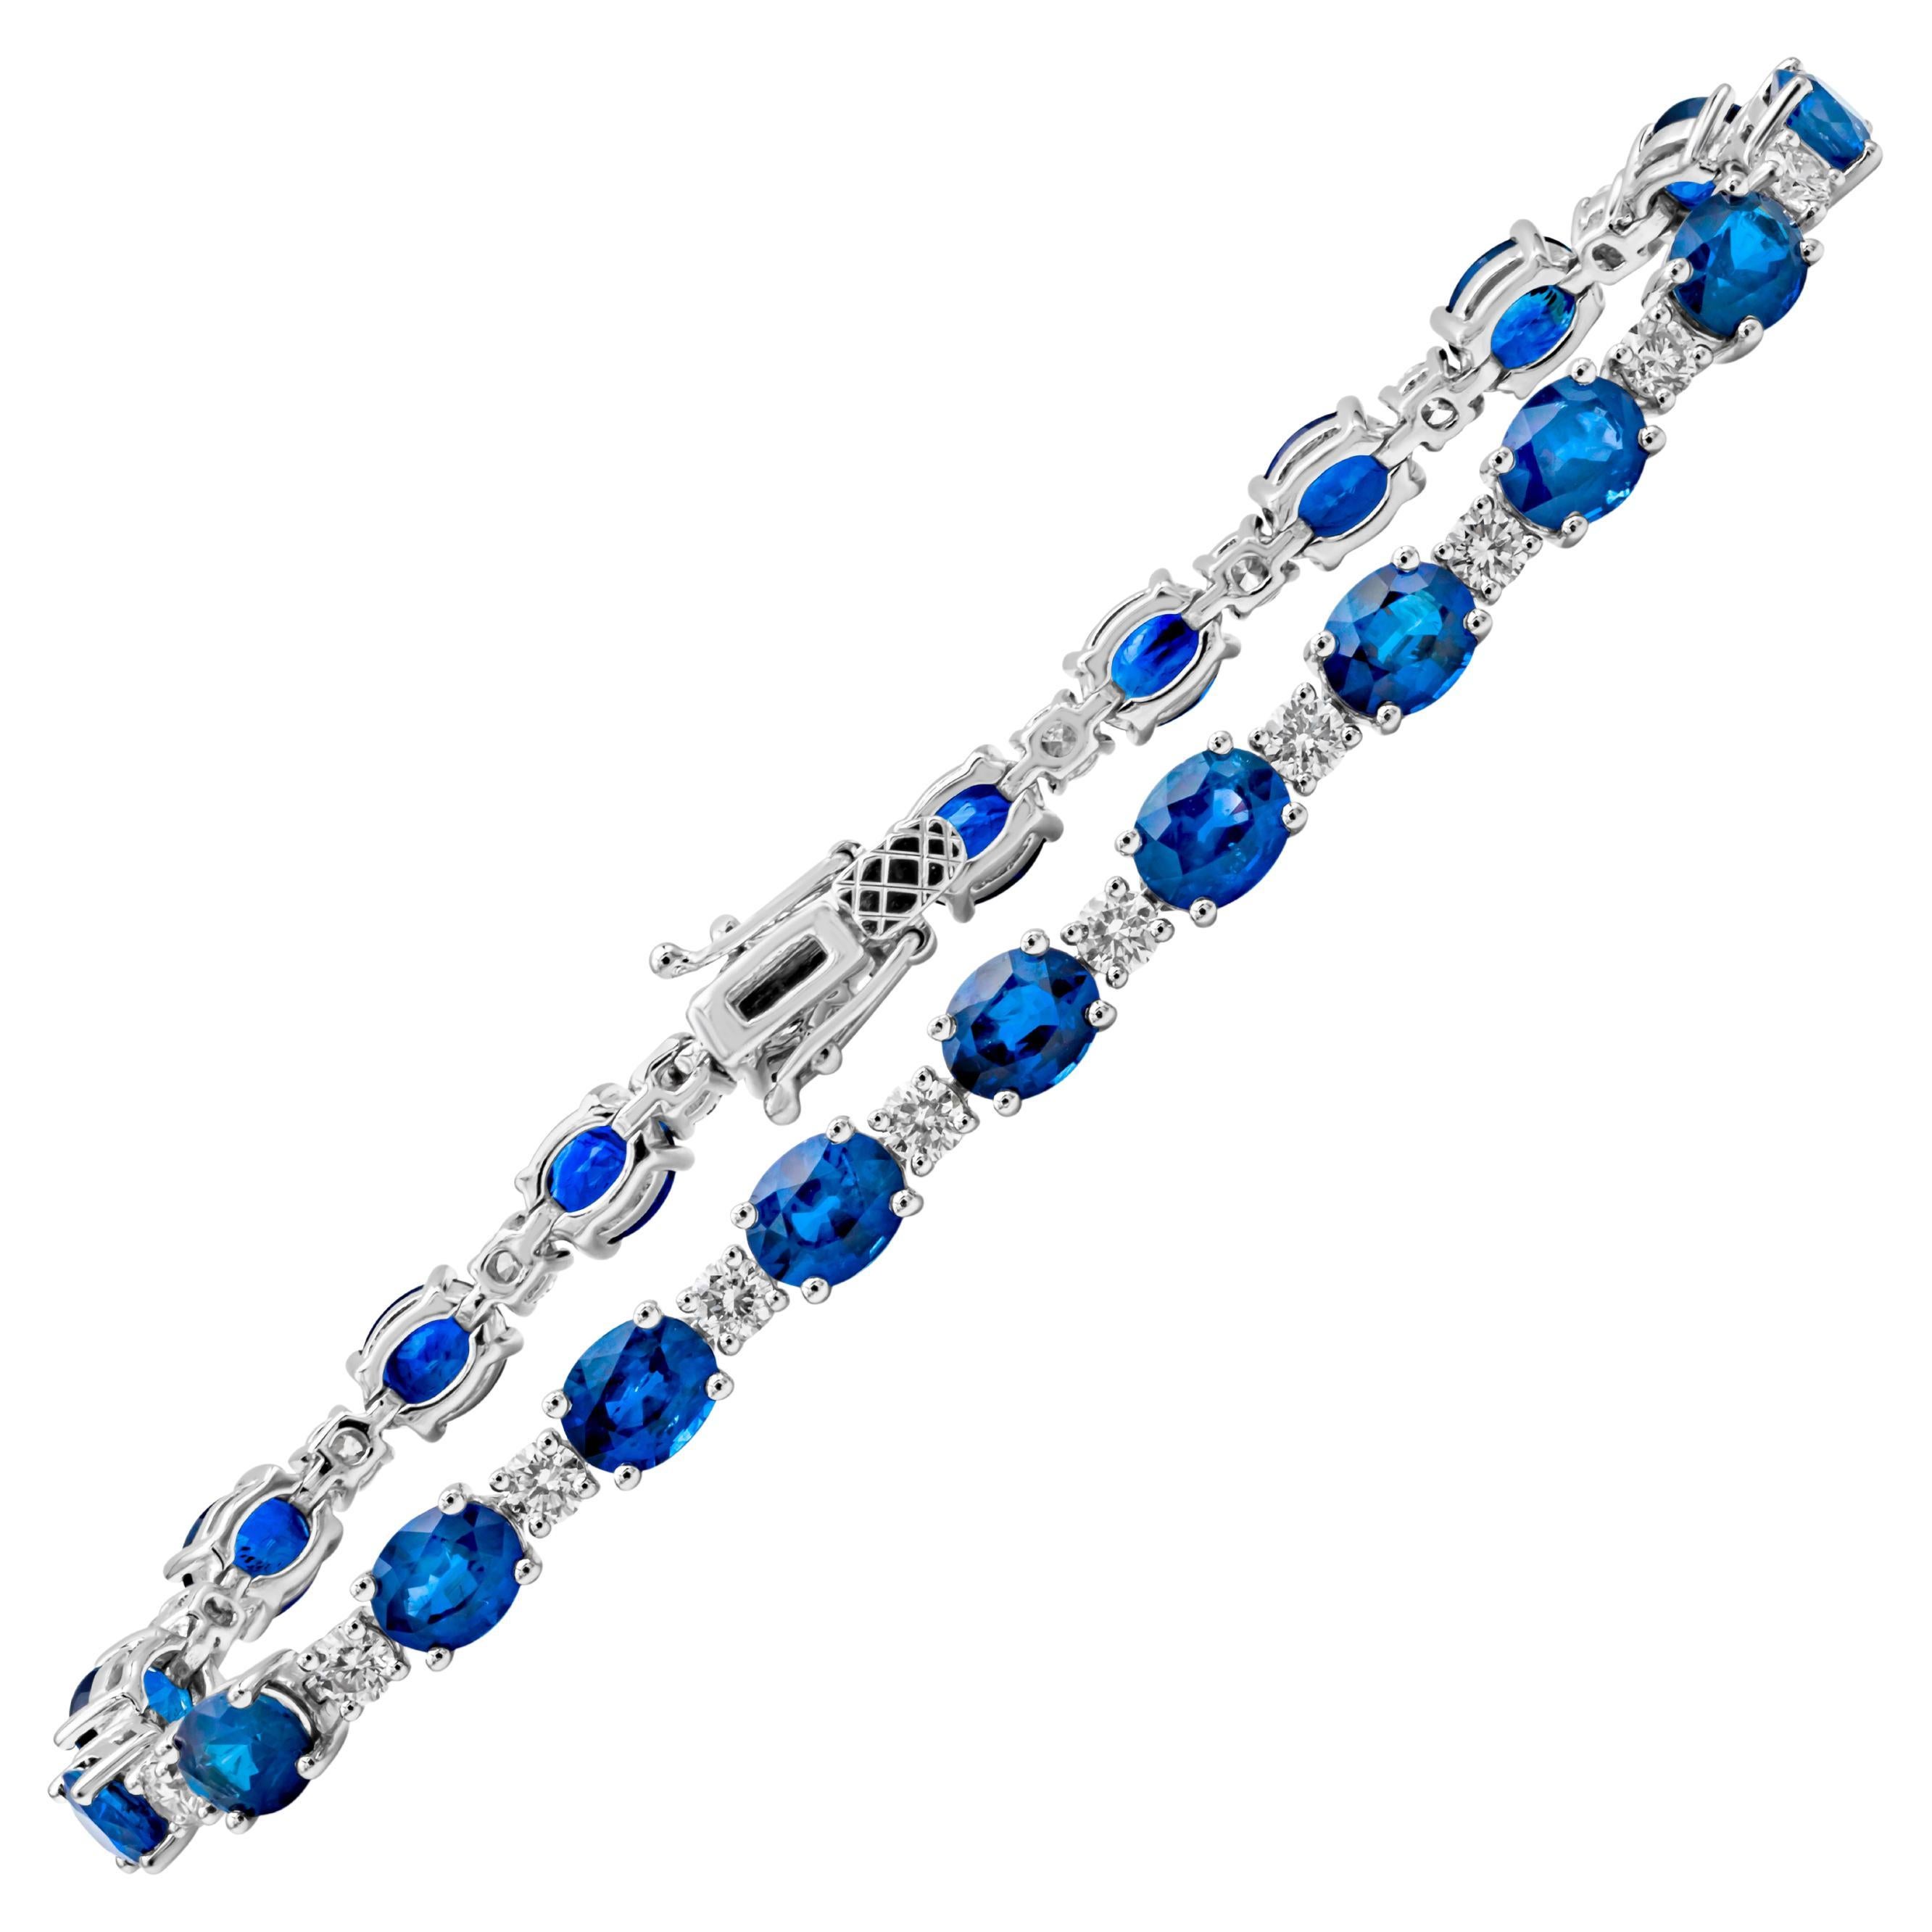 Roman Malakov 12.56 Carats Oval Cut Blue Sapphire & Diamond Tennis Bracelet